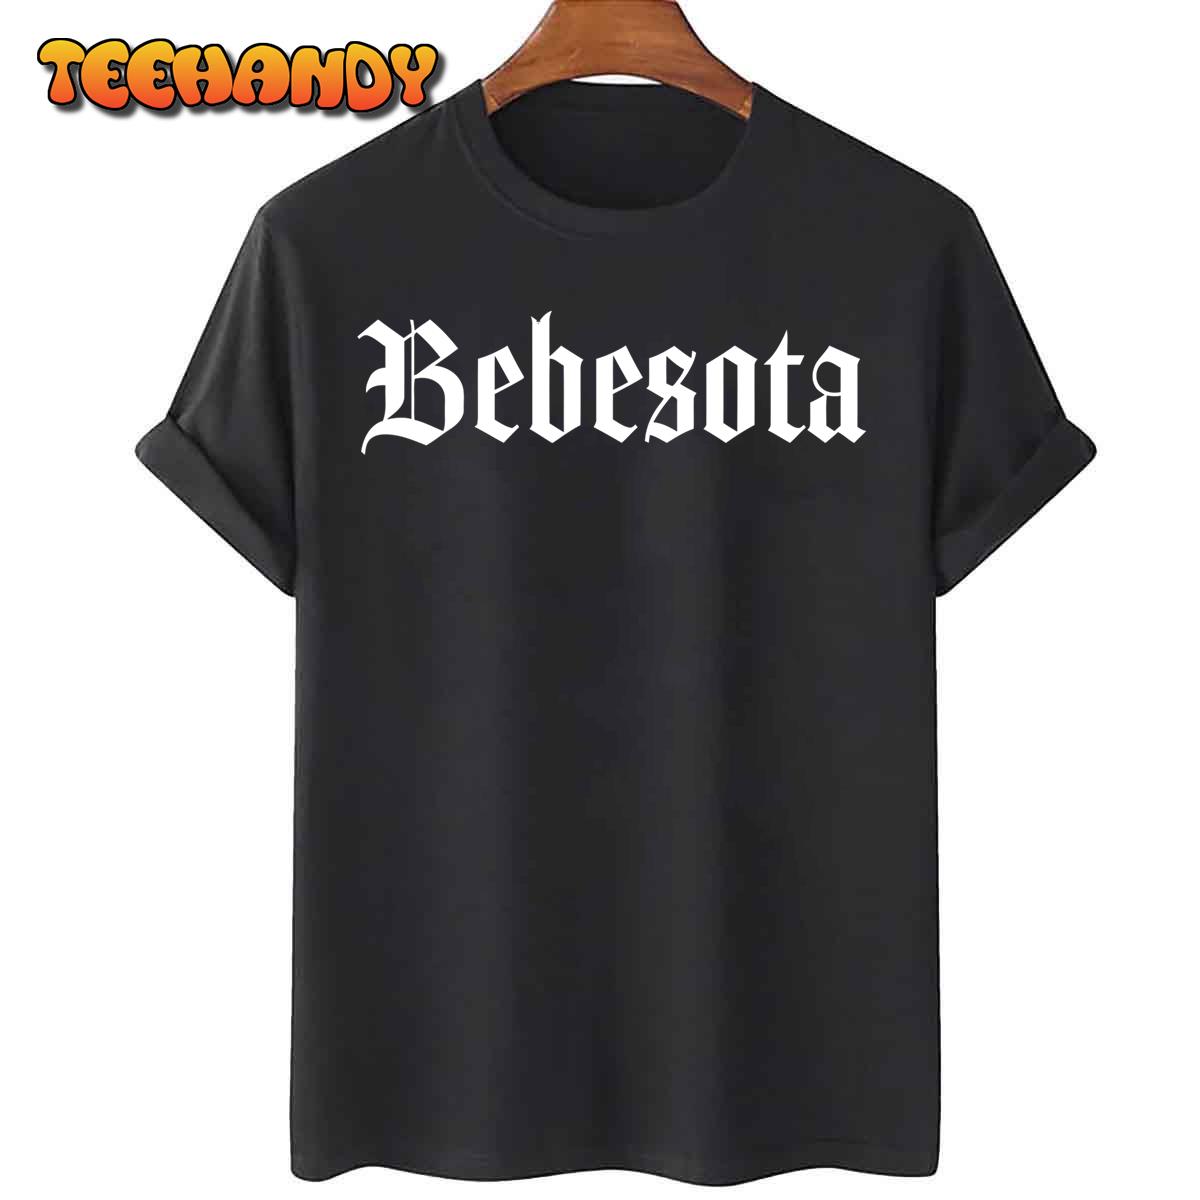 Vintage Bebesota Latina Cute and Cool Retro T-Shirt